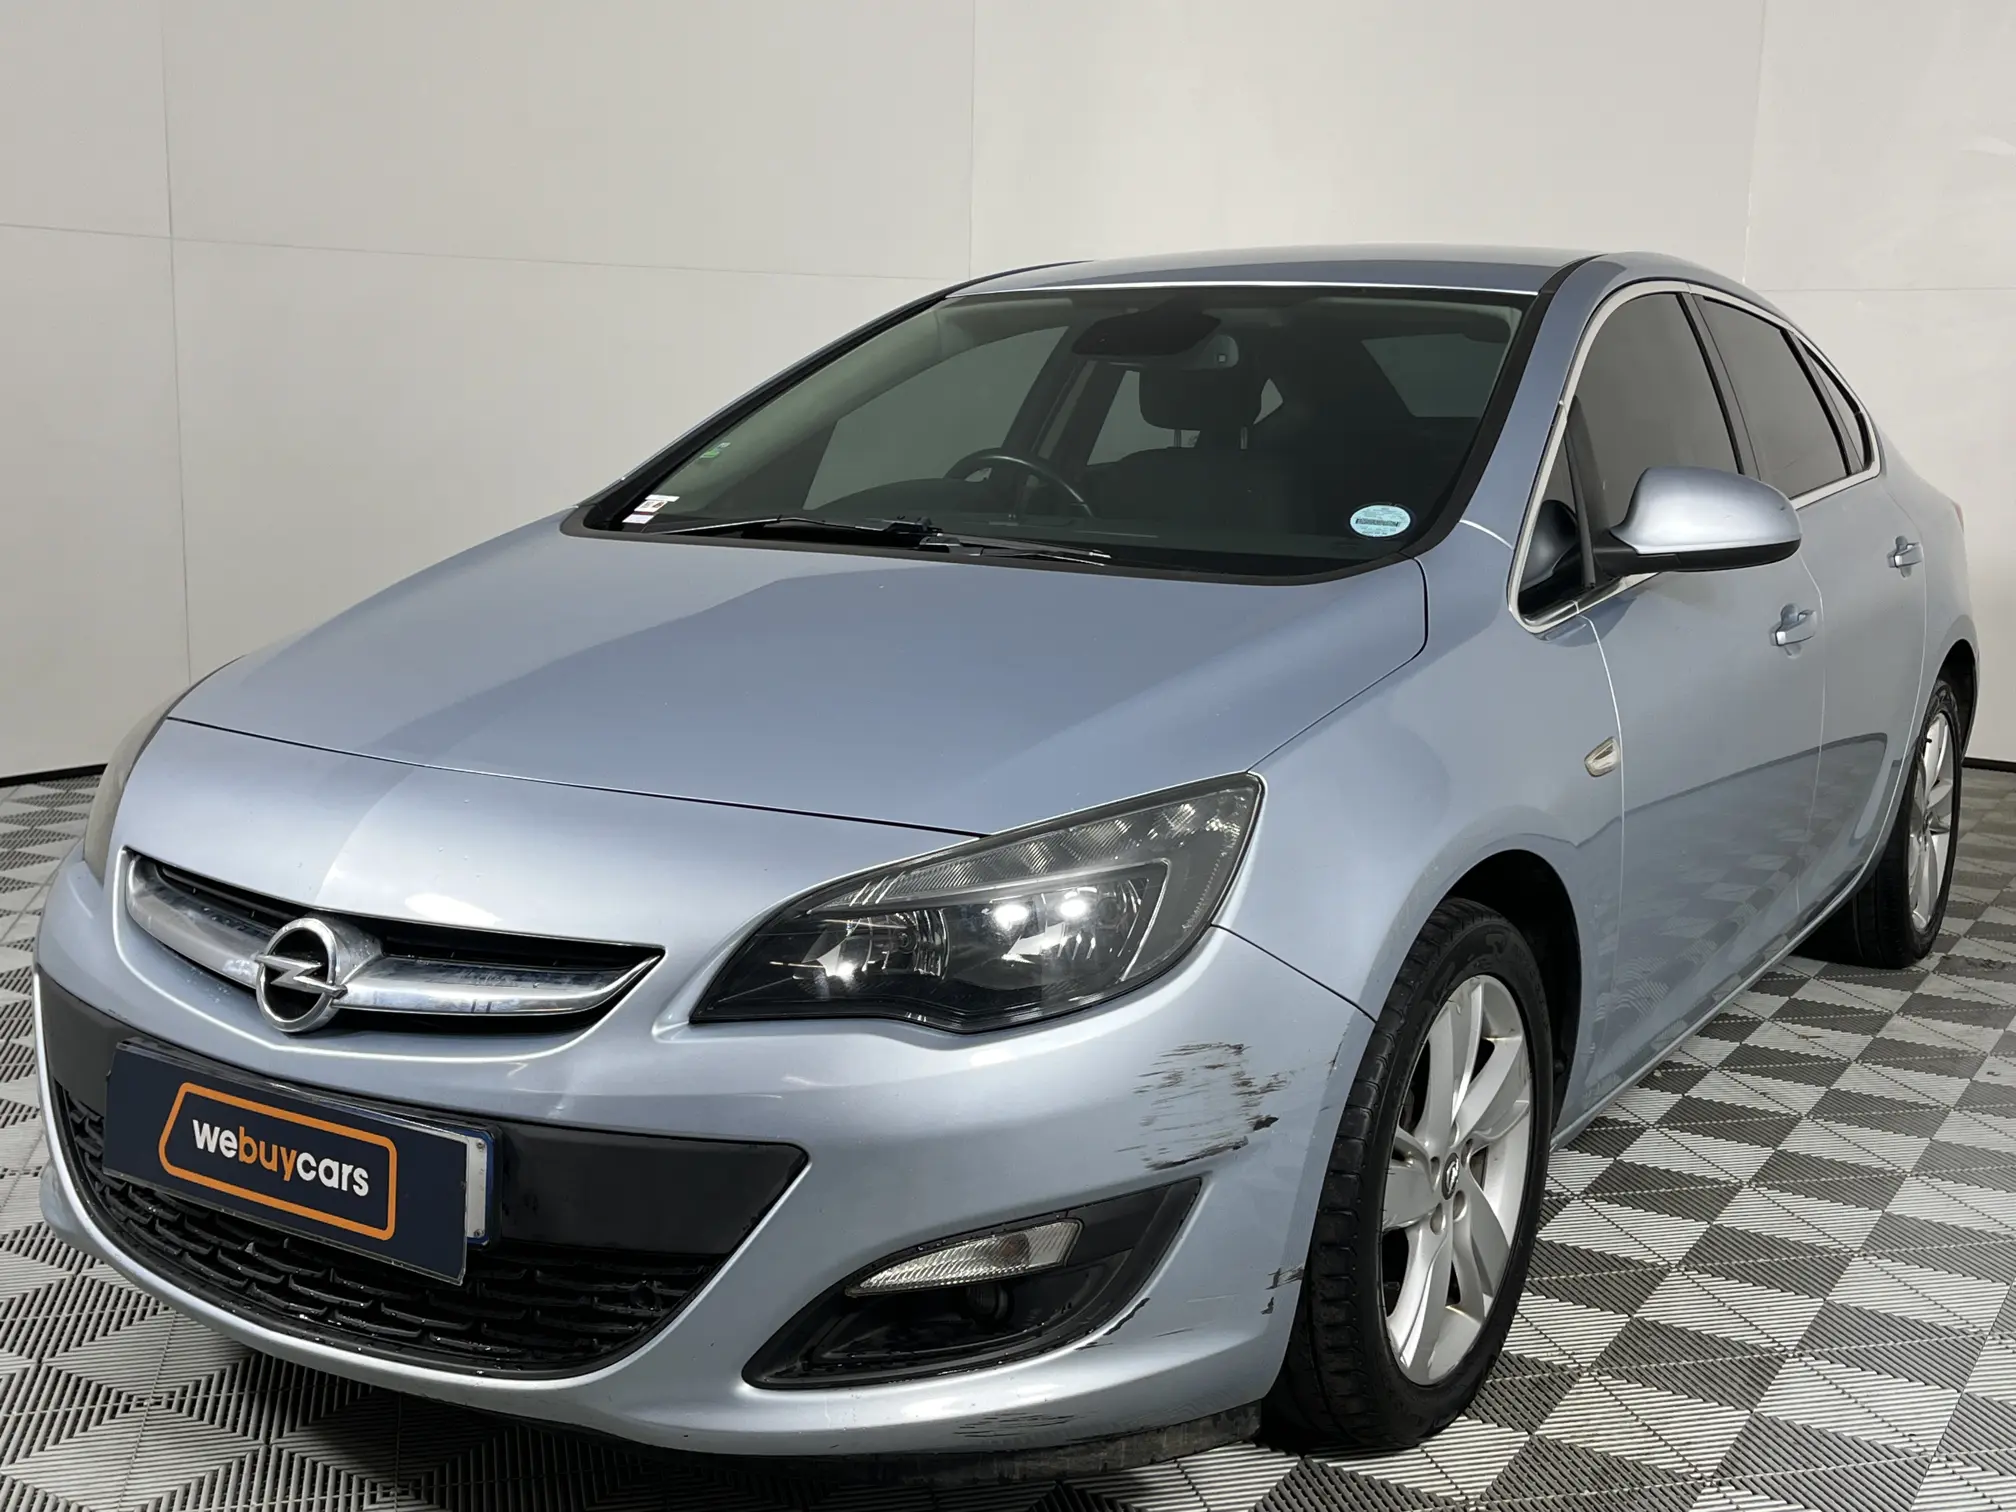 2016 Opel Astra 1.4T Enjoy Auto (5dr)